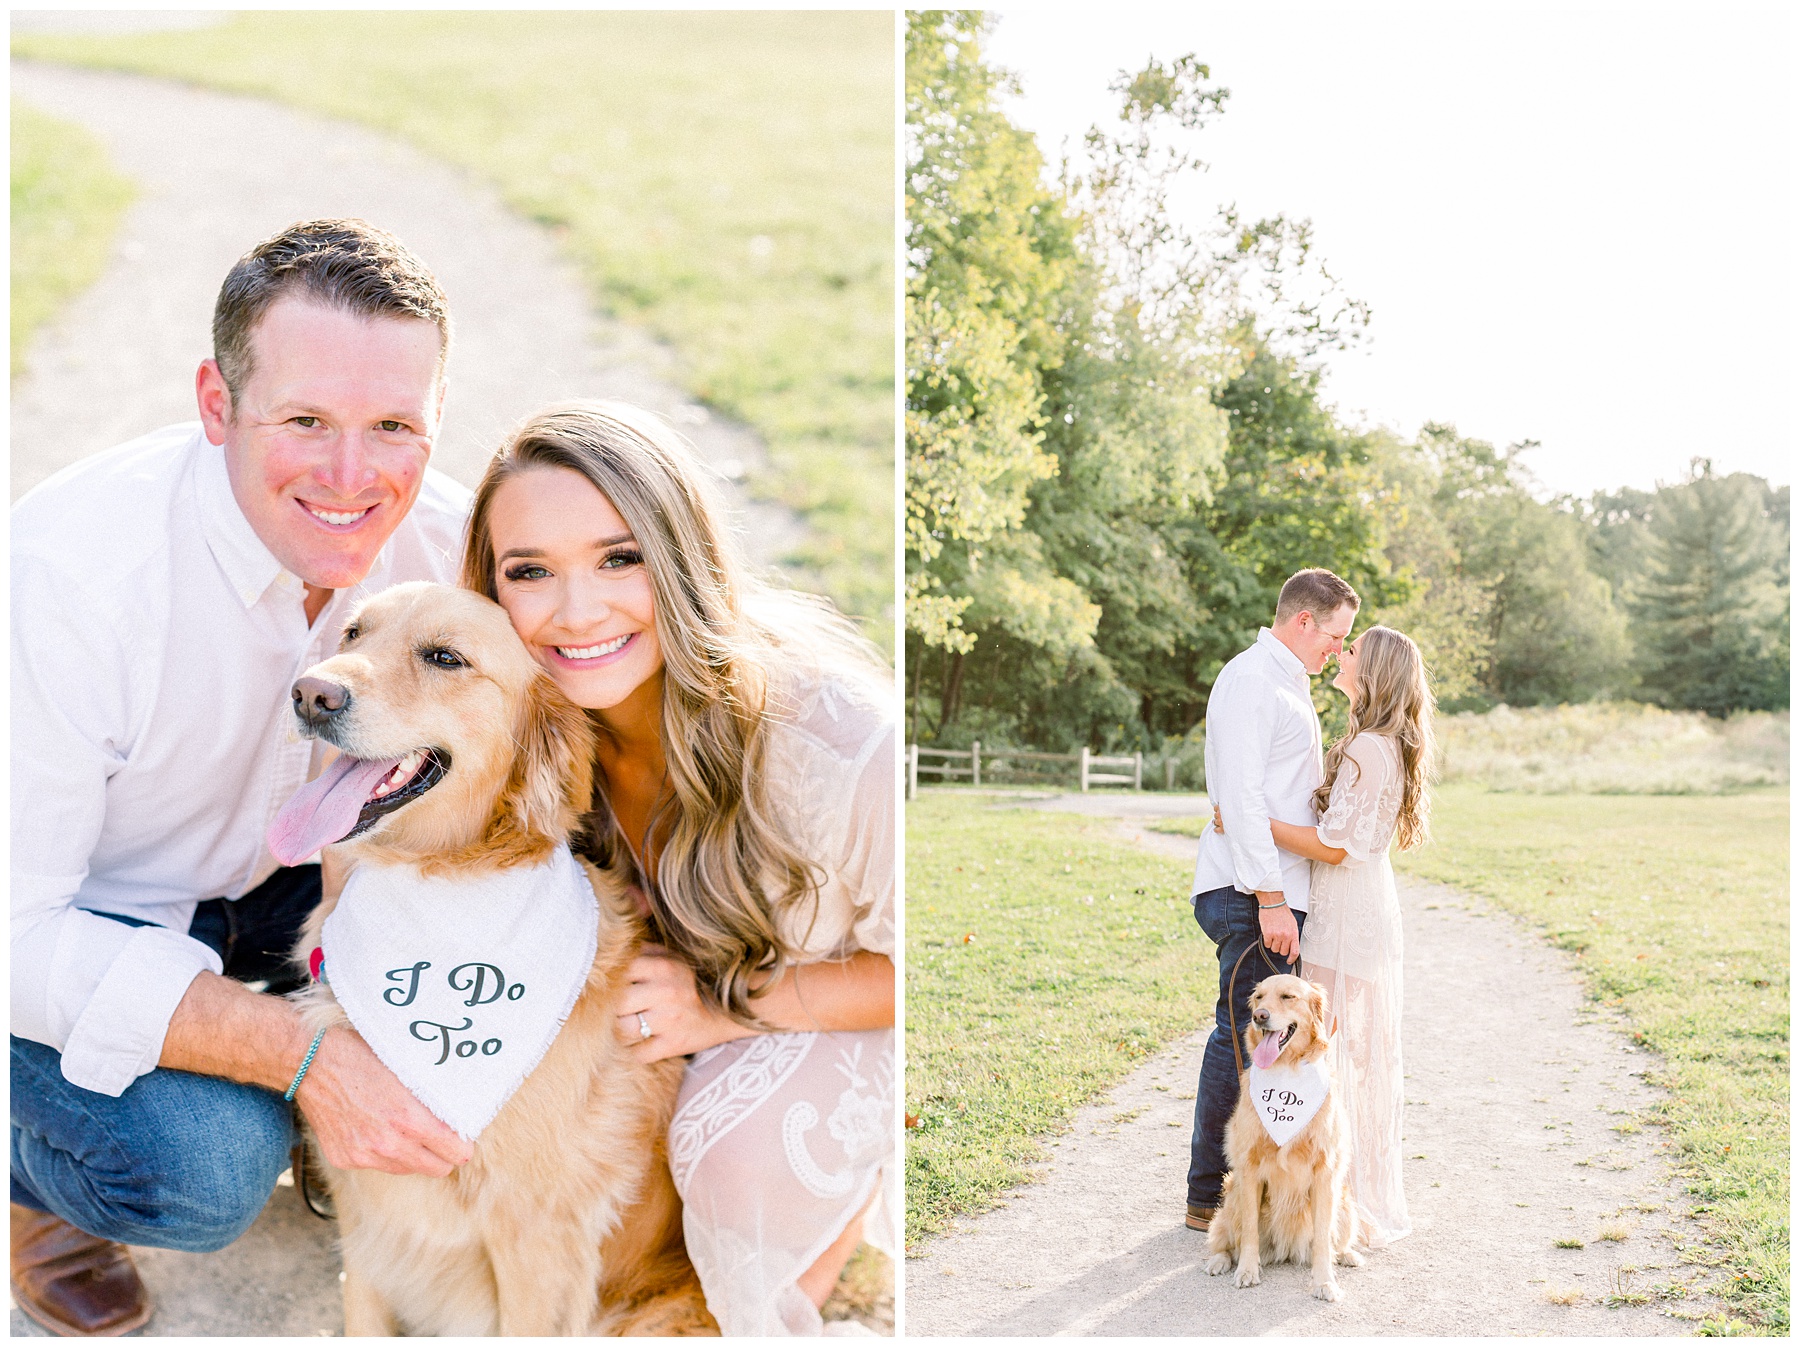 Hoover Reservoir Park Engagement Session by Amanda Eloise Photography. North Carolina Wedding Photographer. Dog engagement session